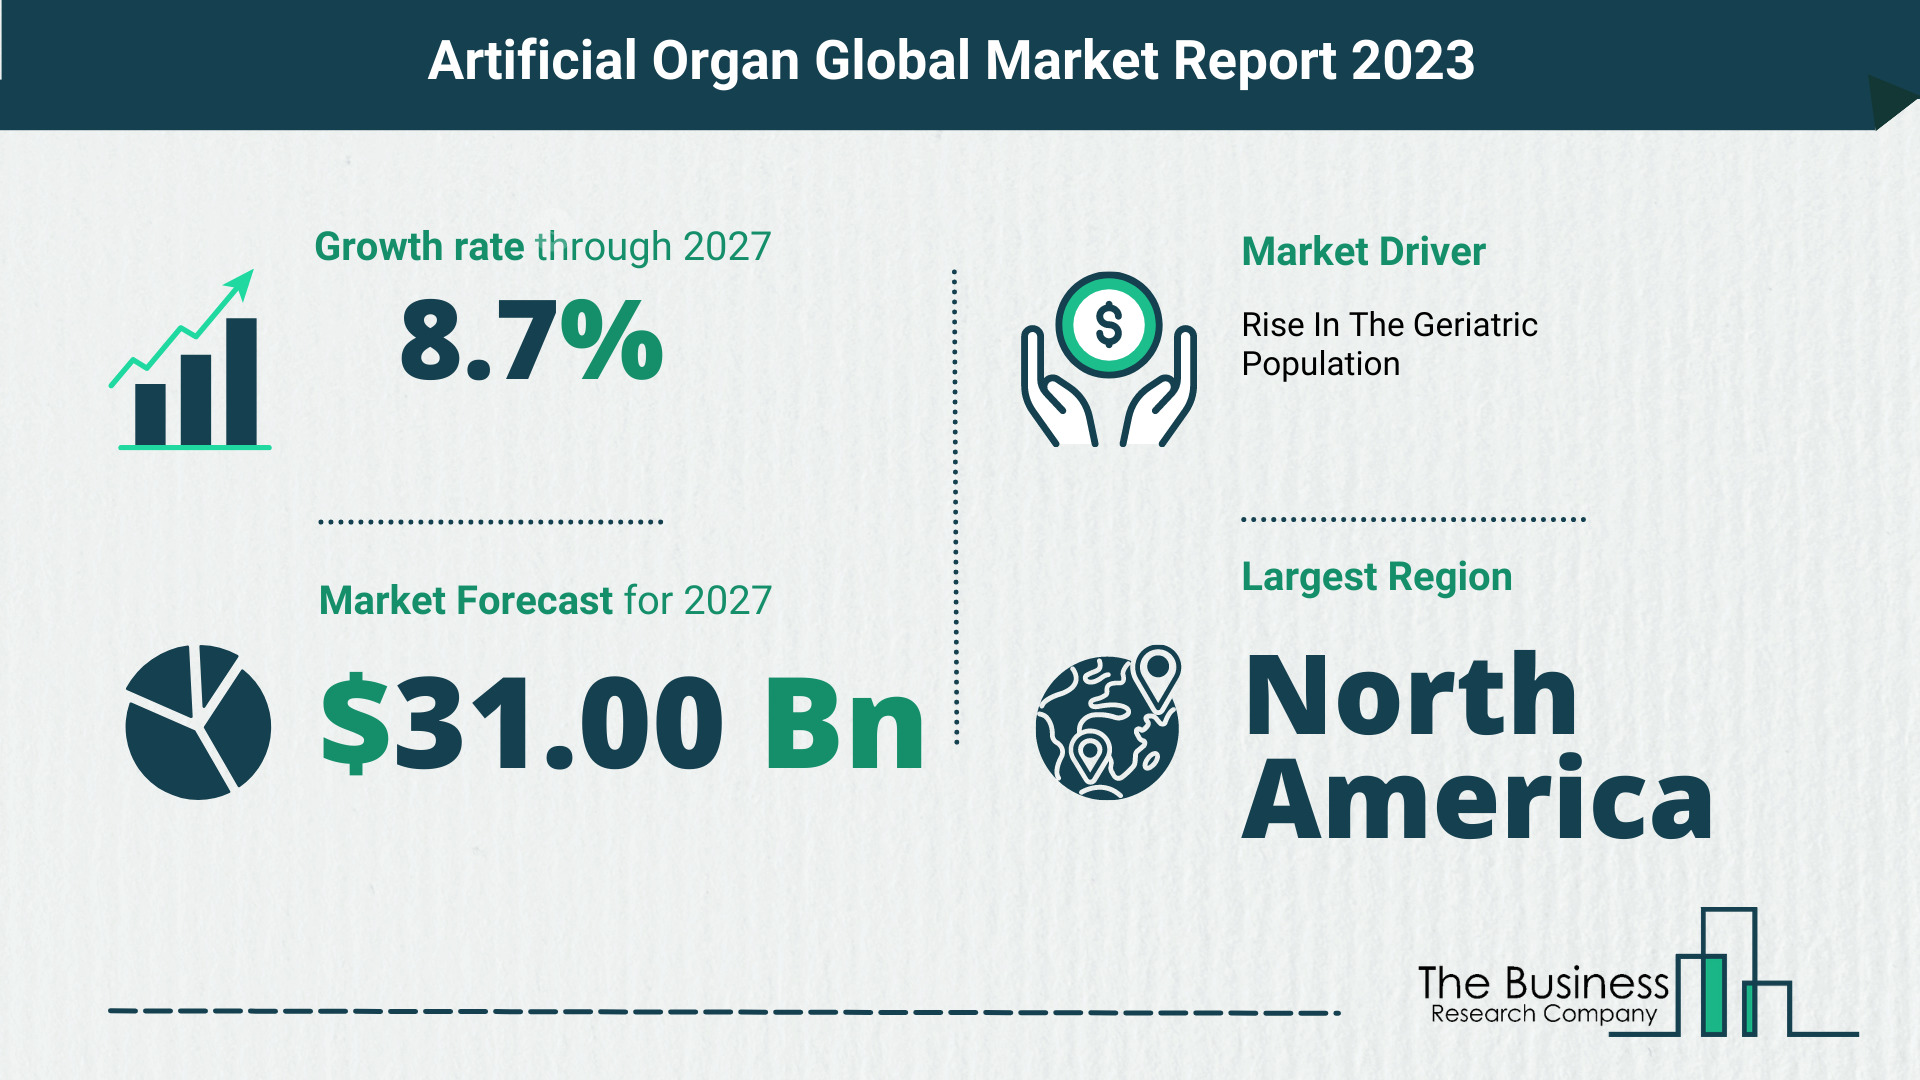 Global Artificial Organ Market